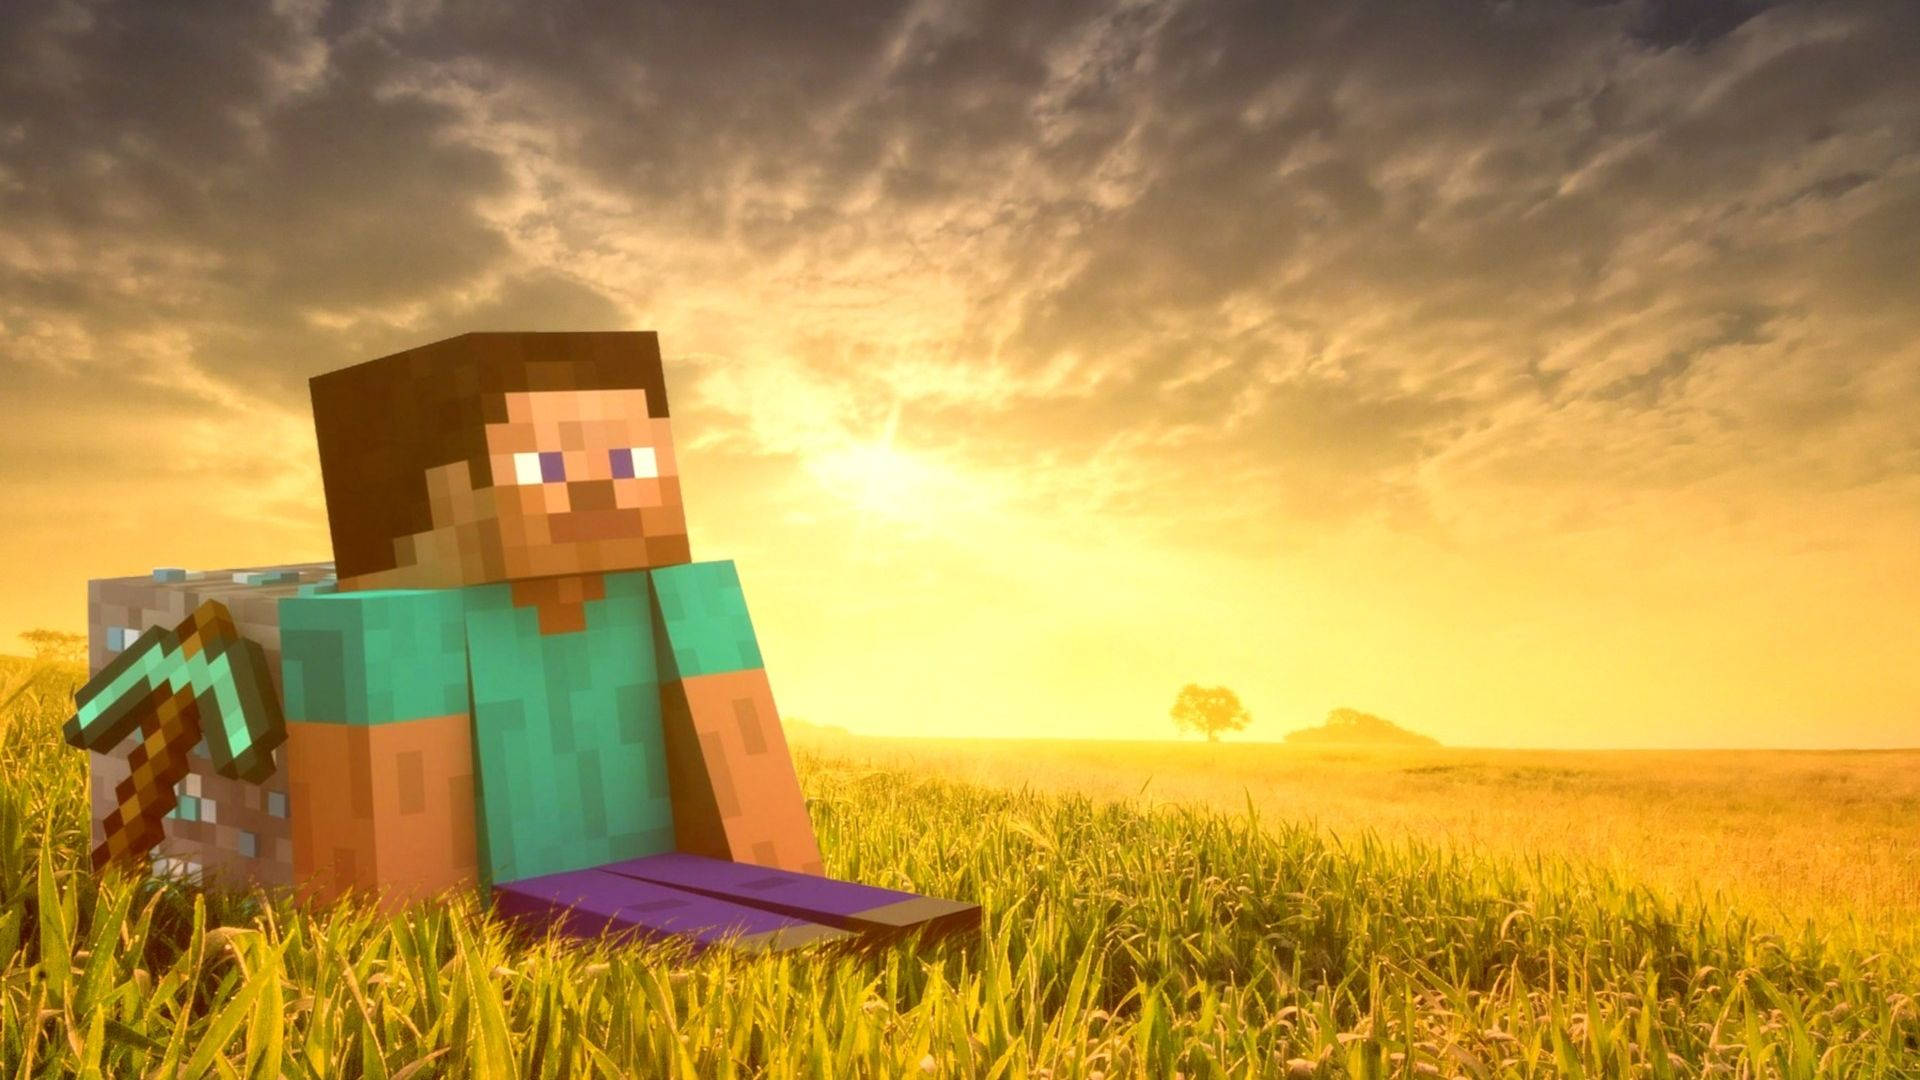 Steve On Grass And Diamond Minecraft Hd Background